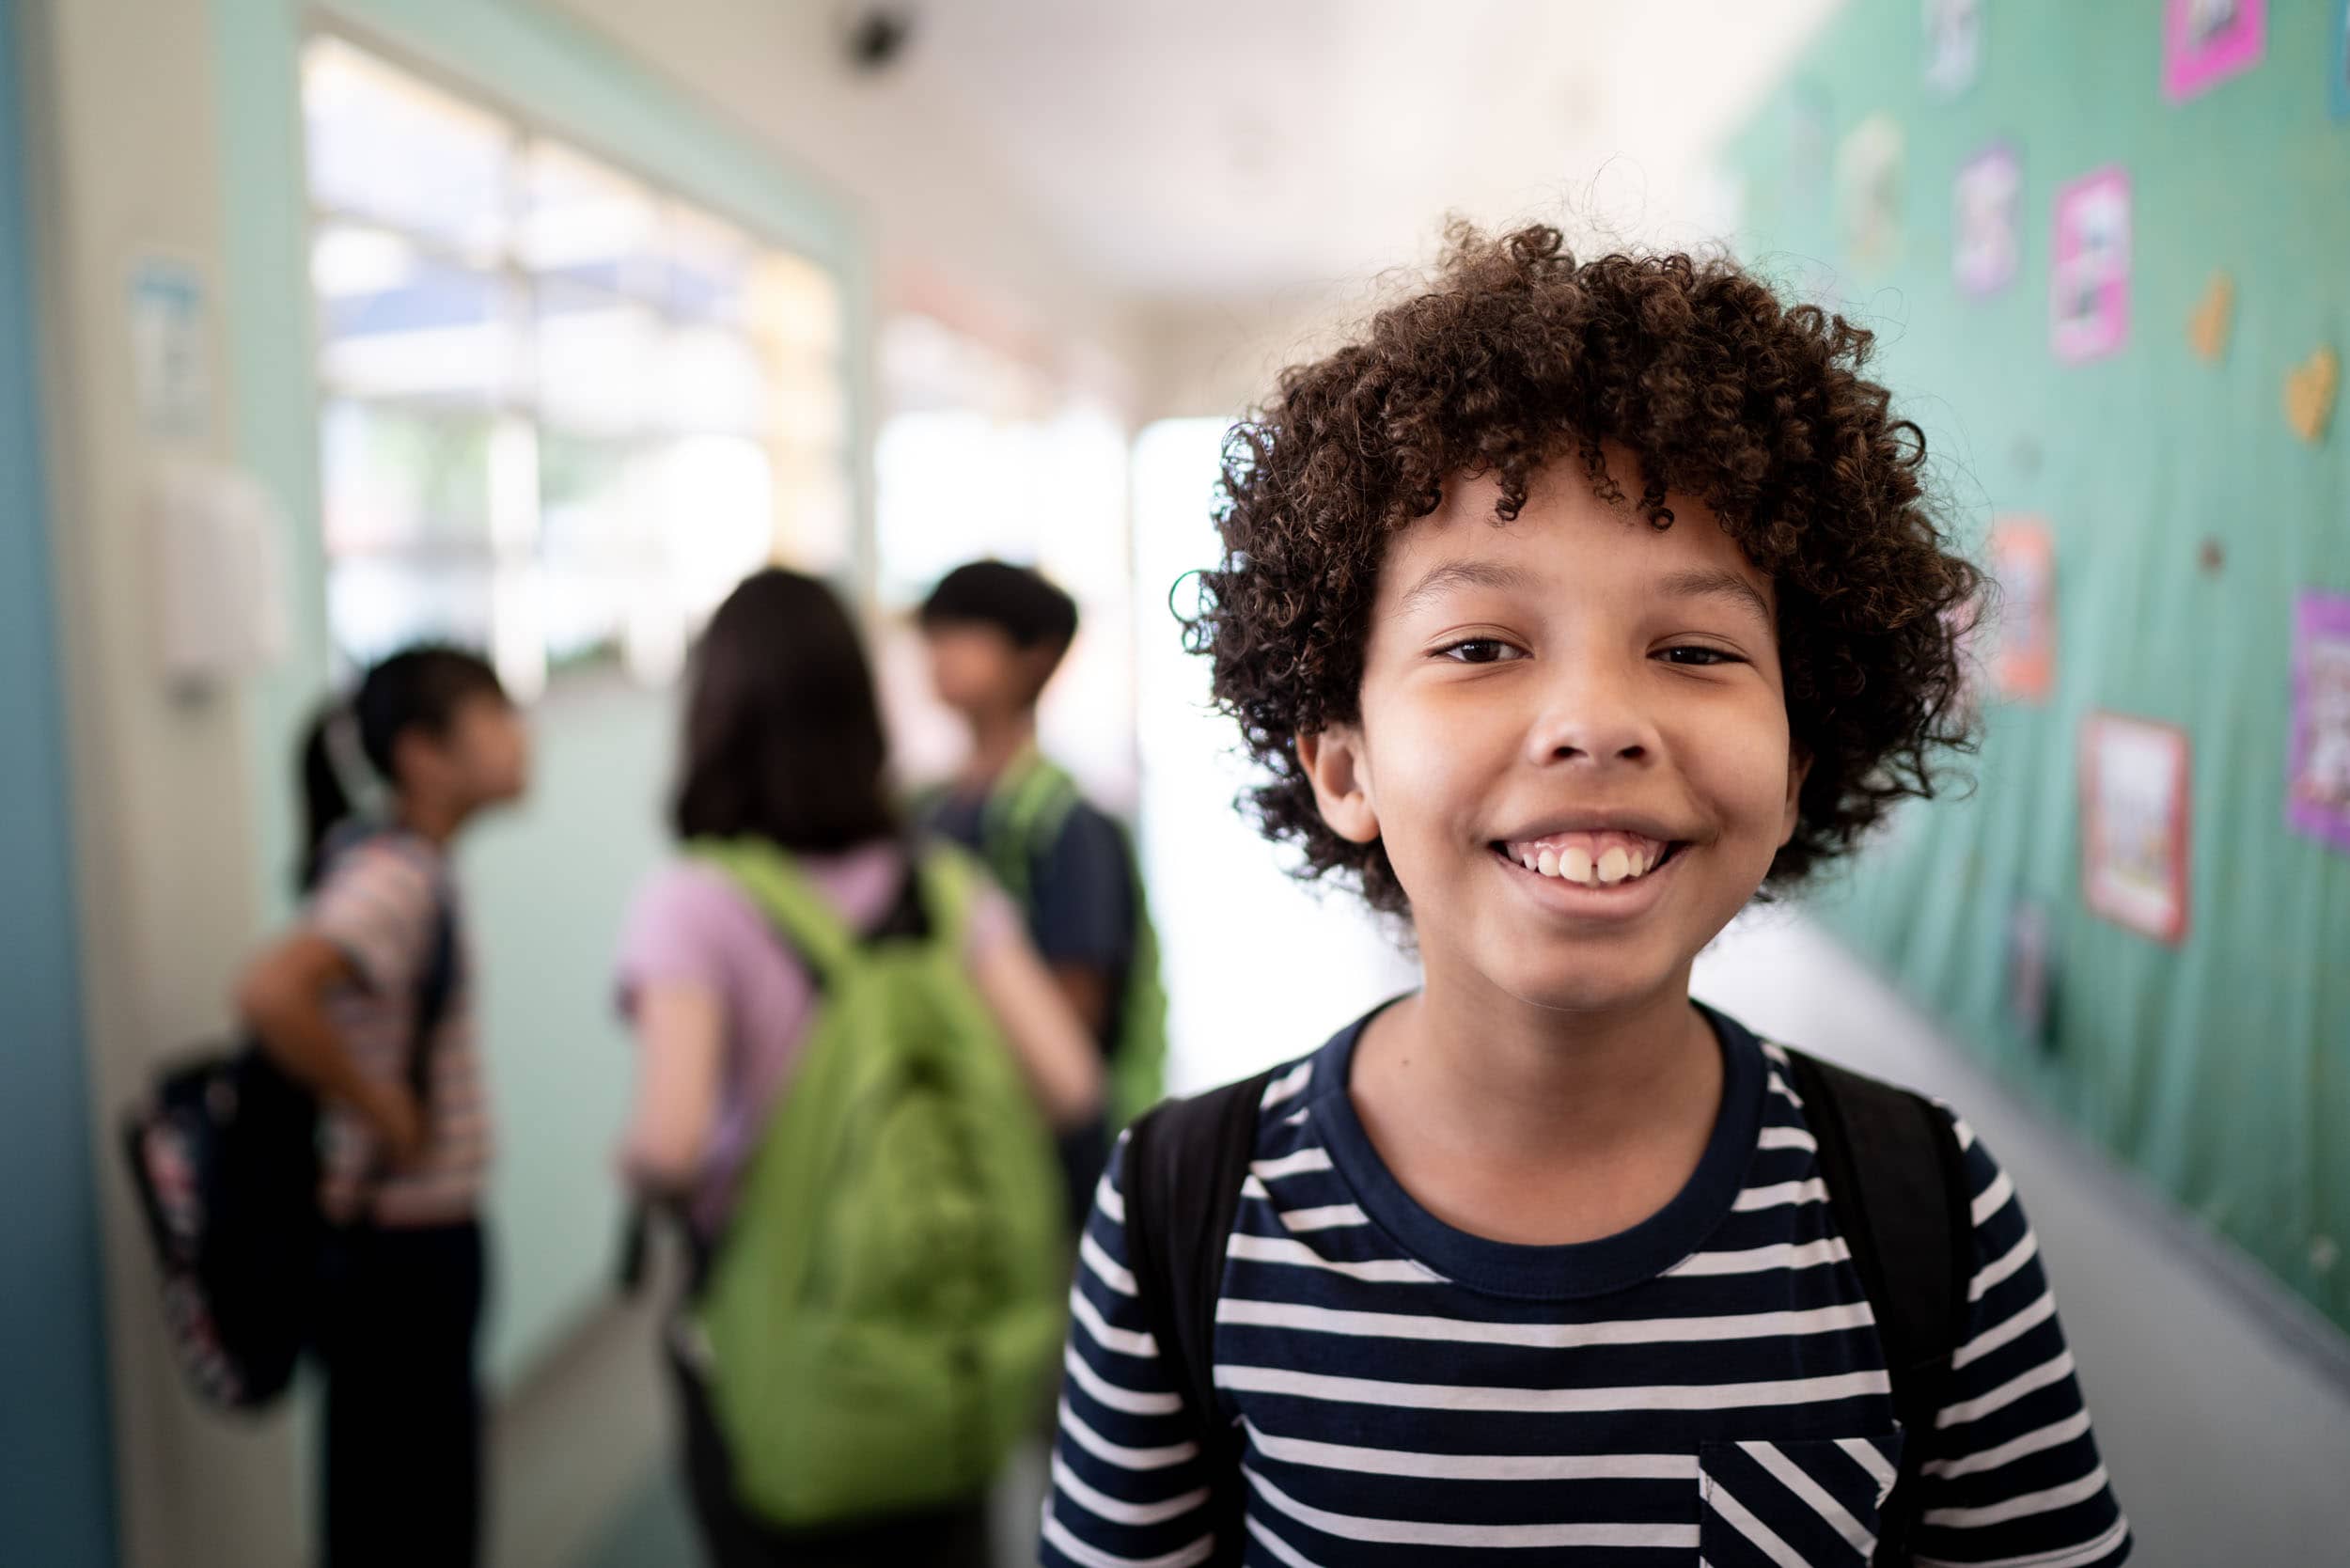 Portrait Of A Boy In The Corridor At School